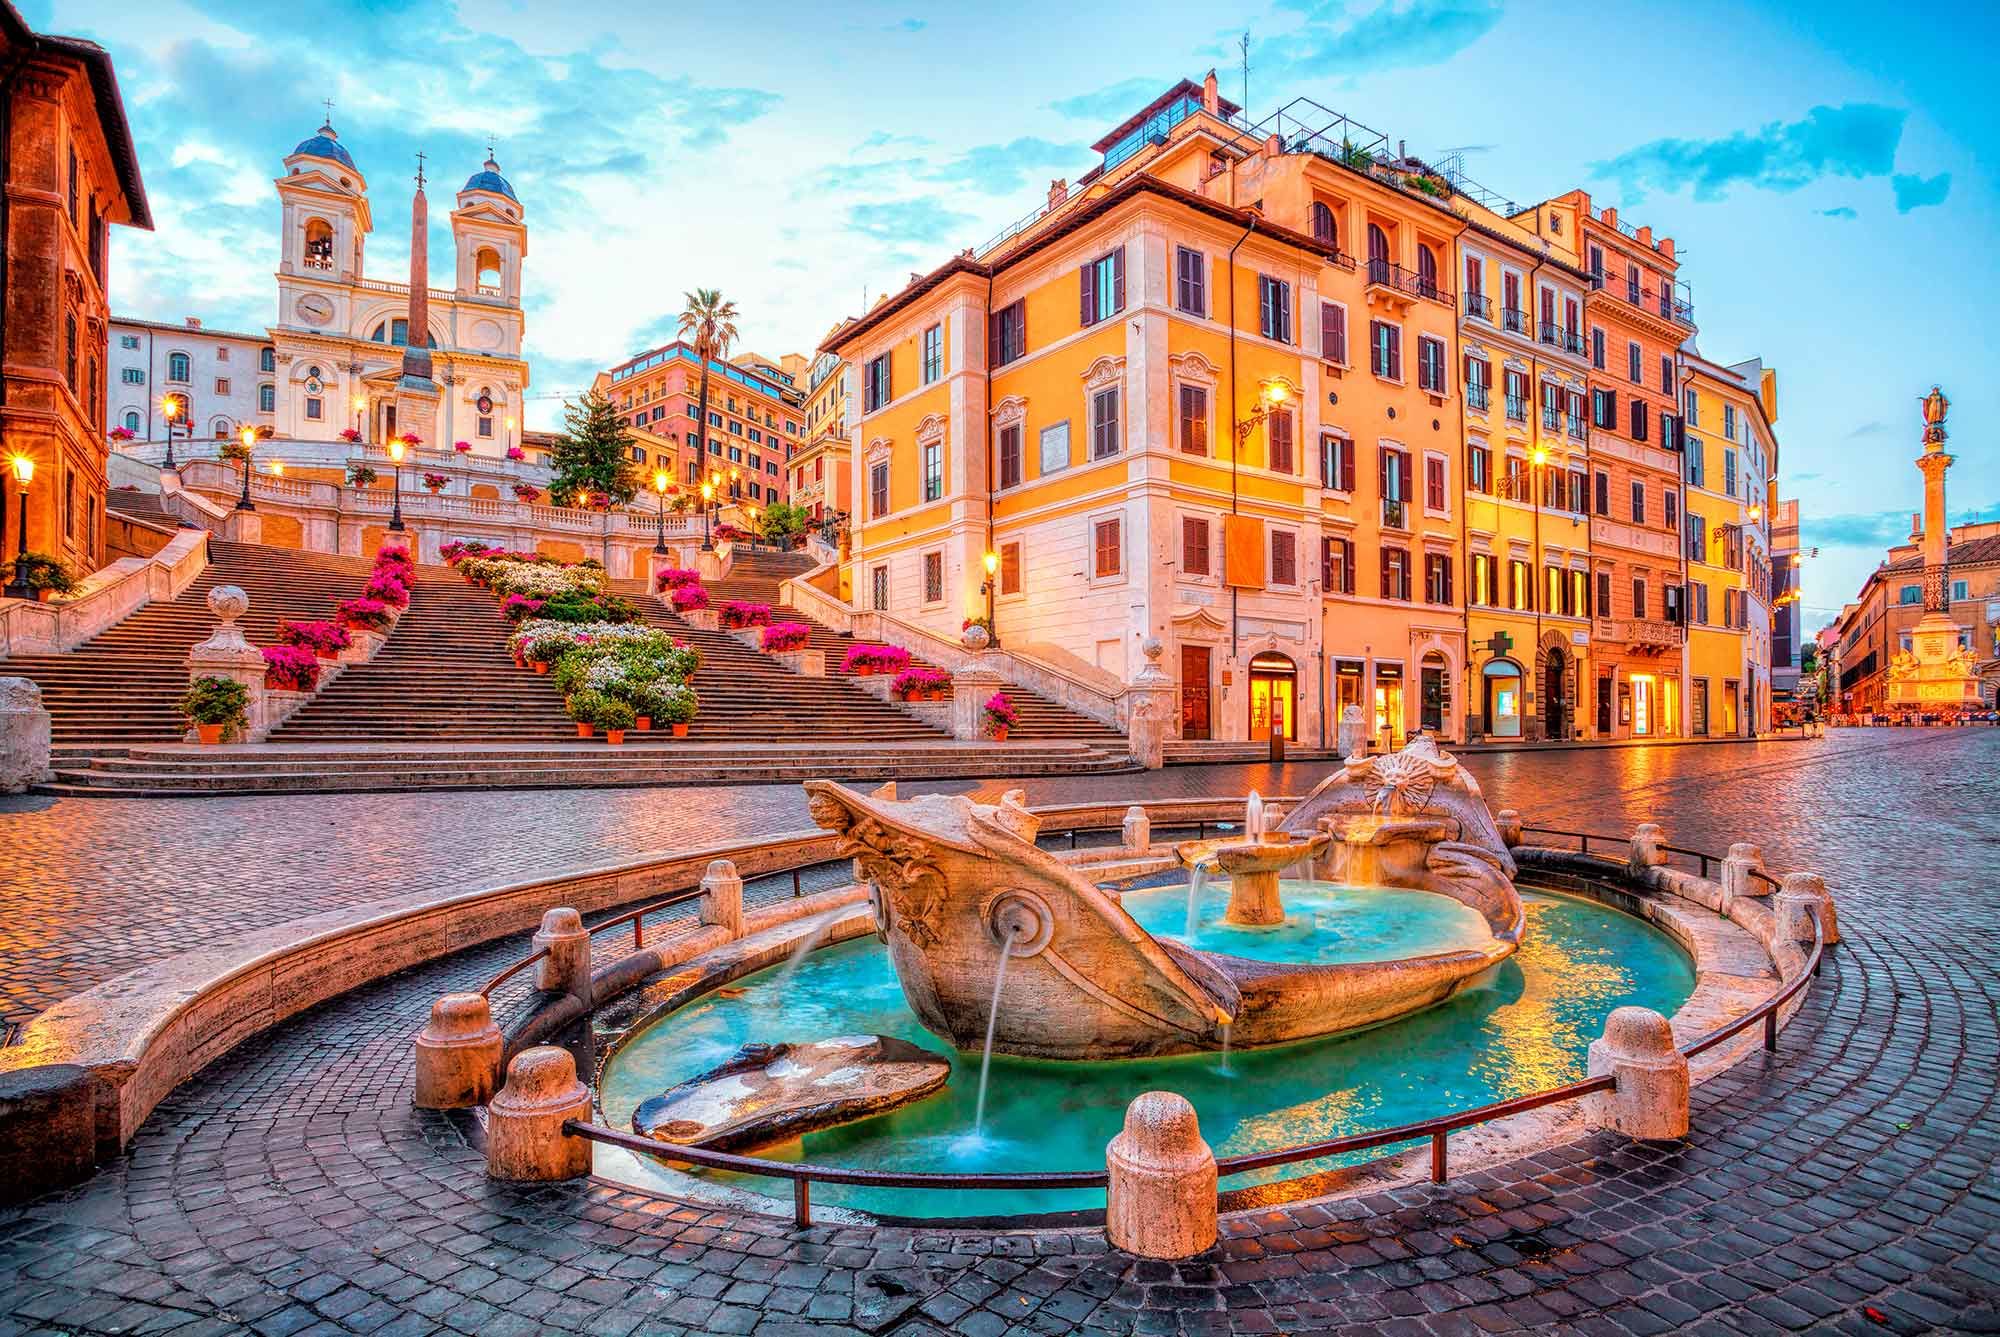 Roma - Descubre Fontana di Trevi##Descubre Colosseum##Descubre La ciudad del Vaticano